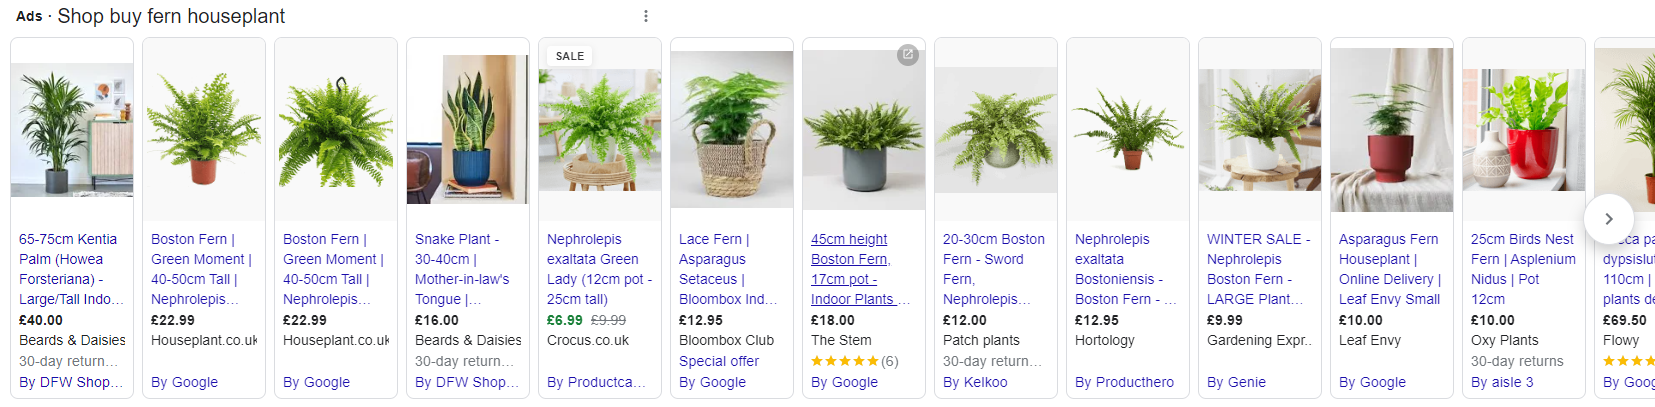 Fern houseplant Shopping Ads